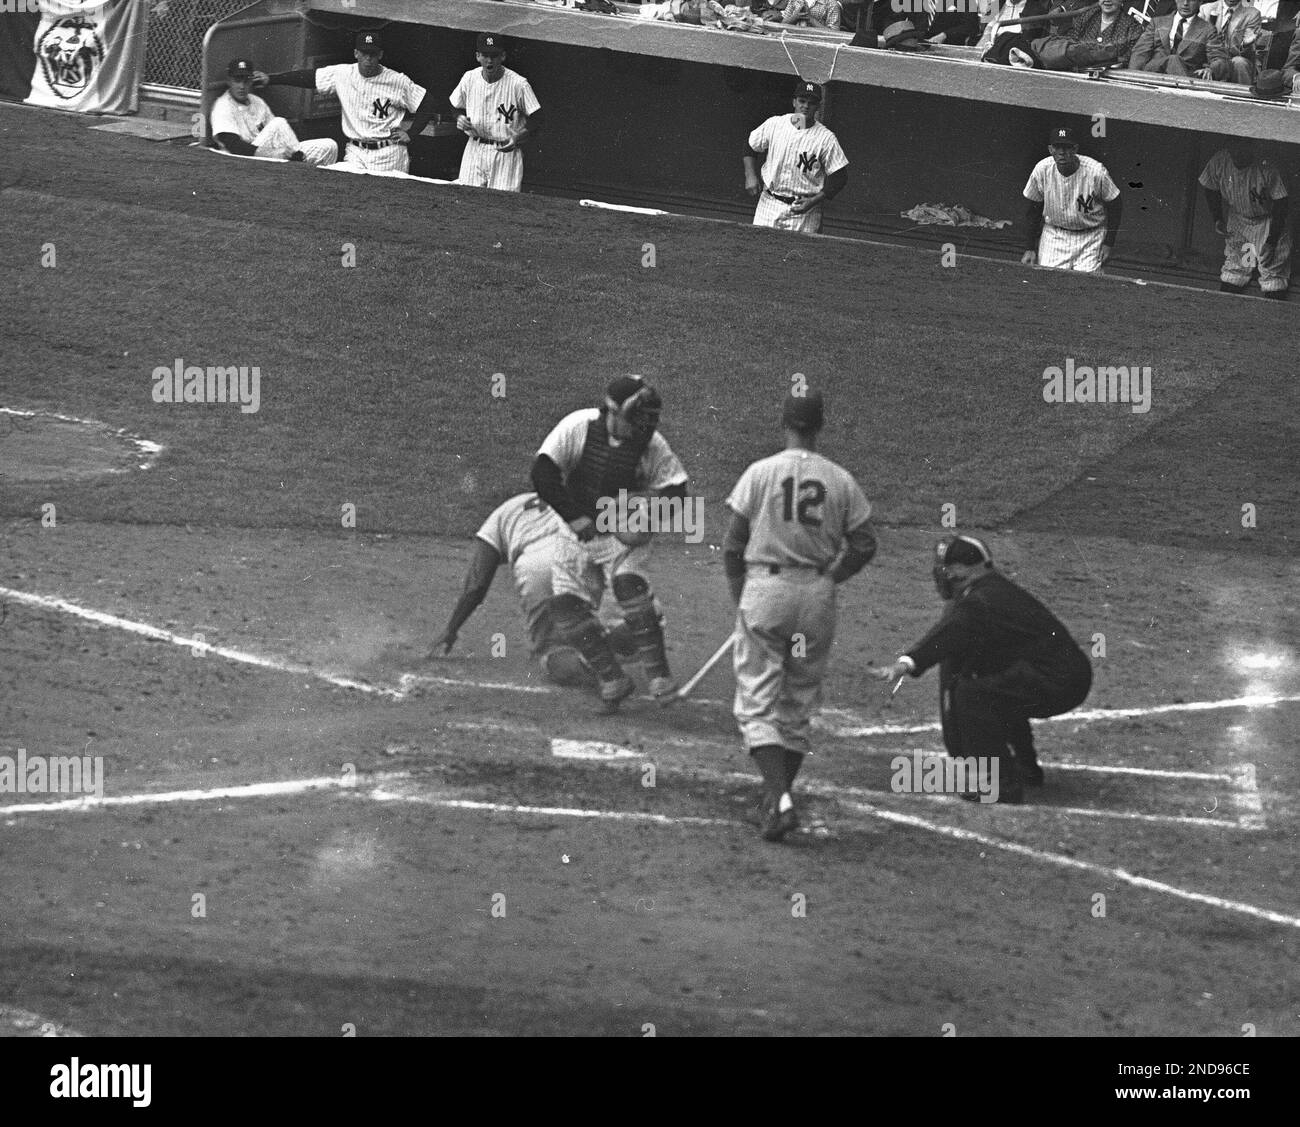 Jackie robinson stealing home Yogi Berra Catcher in 1st game 1955